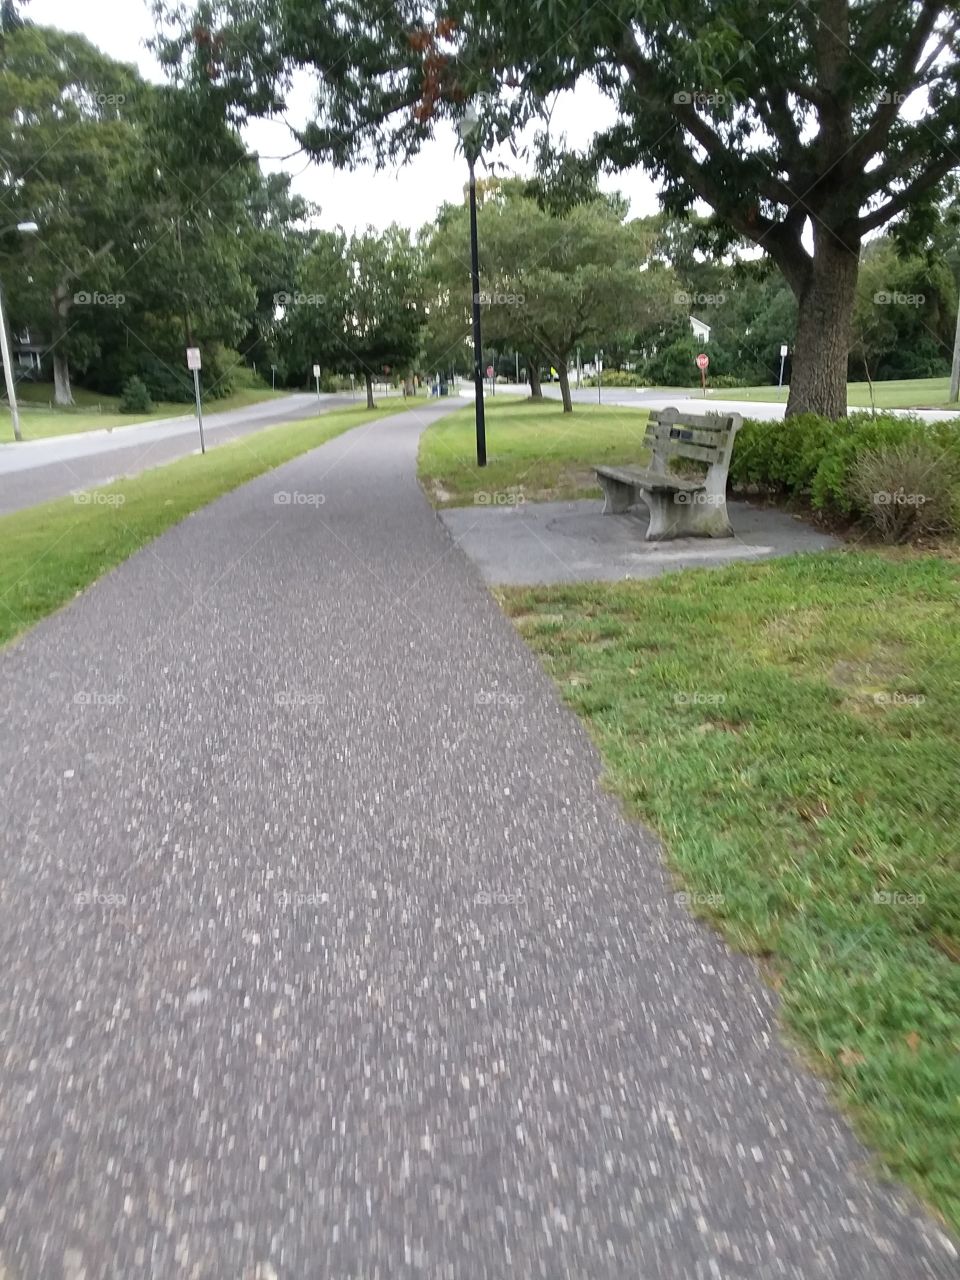 walking the bike path.